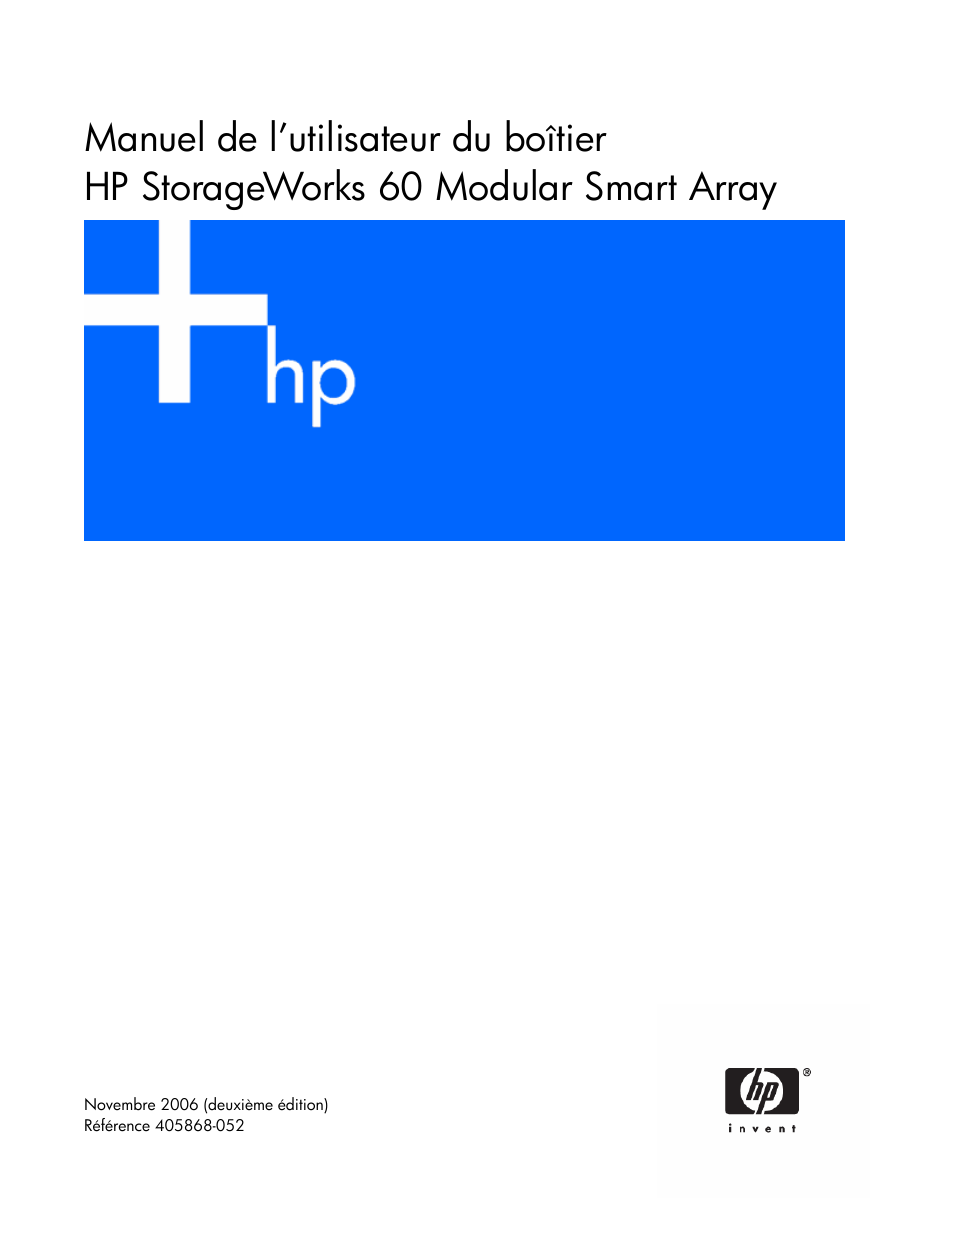 HP Modular Smart Array HP 60 Manuel d'utilisation | Pages: 50